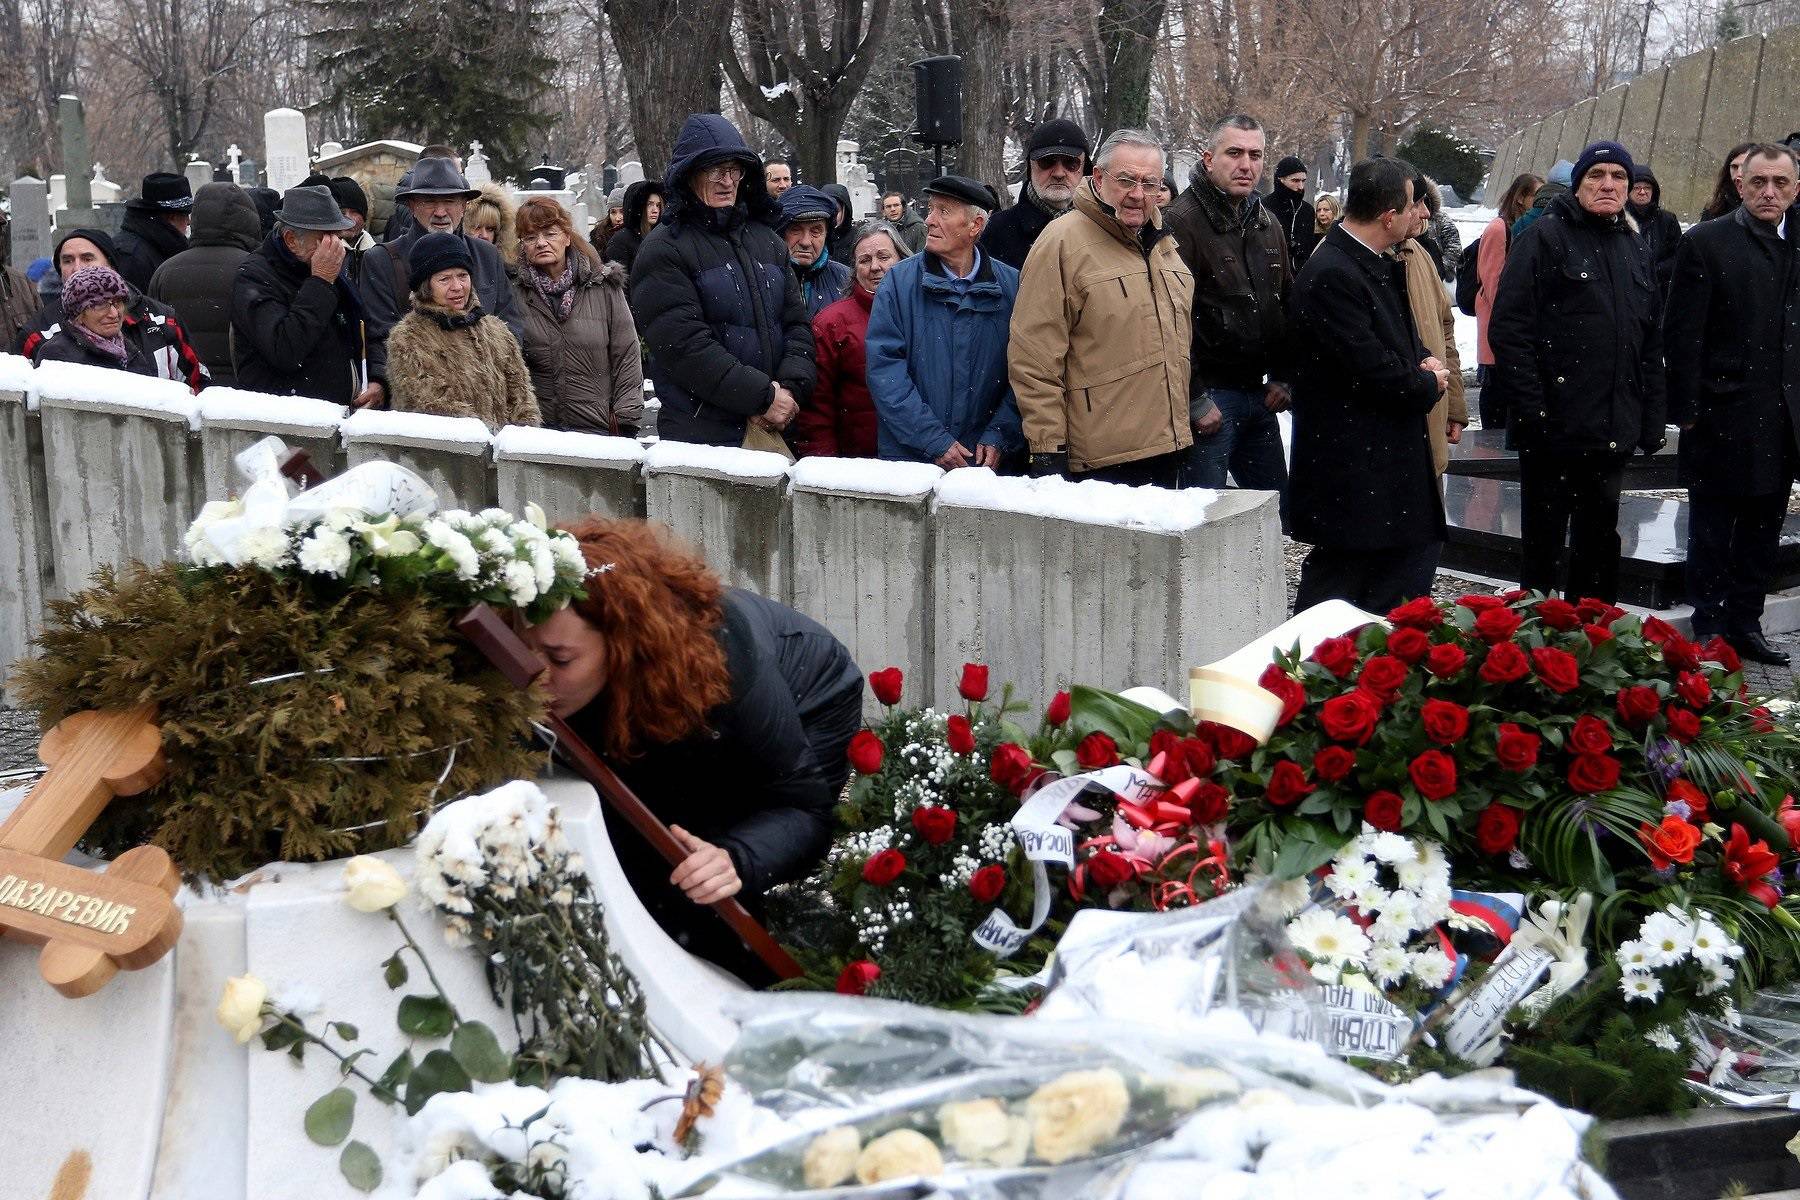 Funeral of actor Marko Nikolic held on New cemetery.
Sahrana glumca Marka Nikolica na Novom groblju.